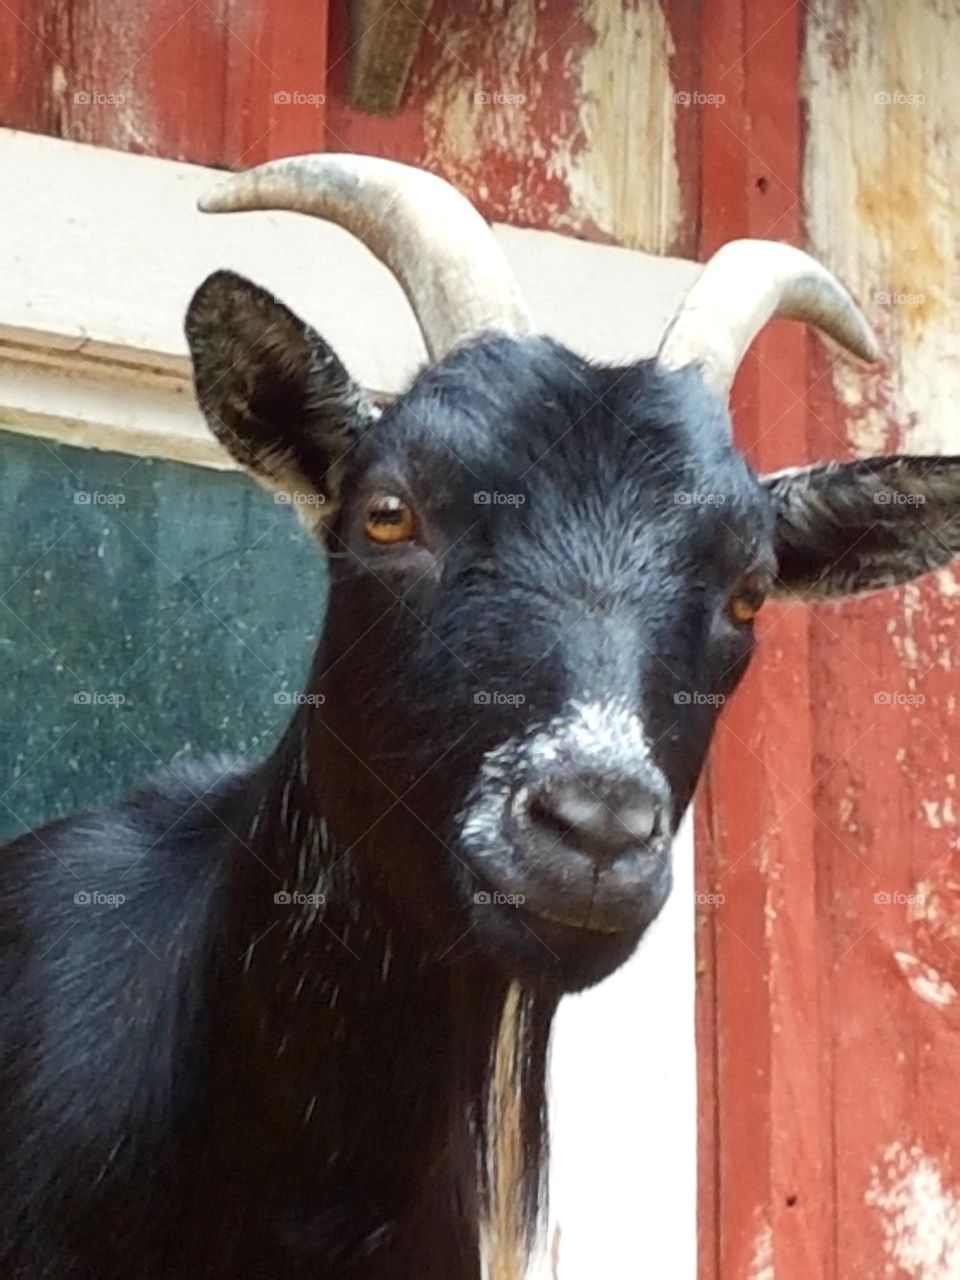 Adorable goat!!